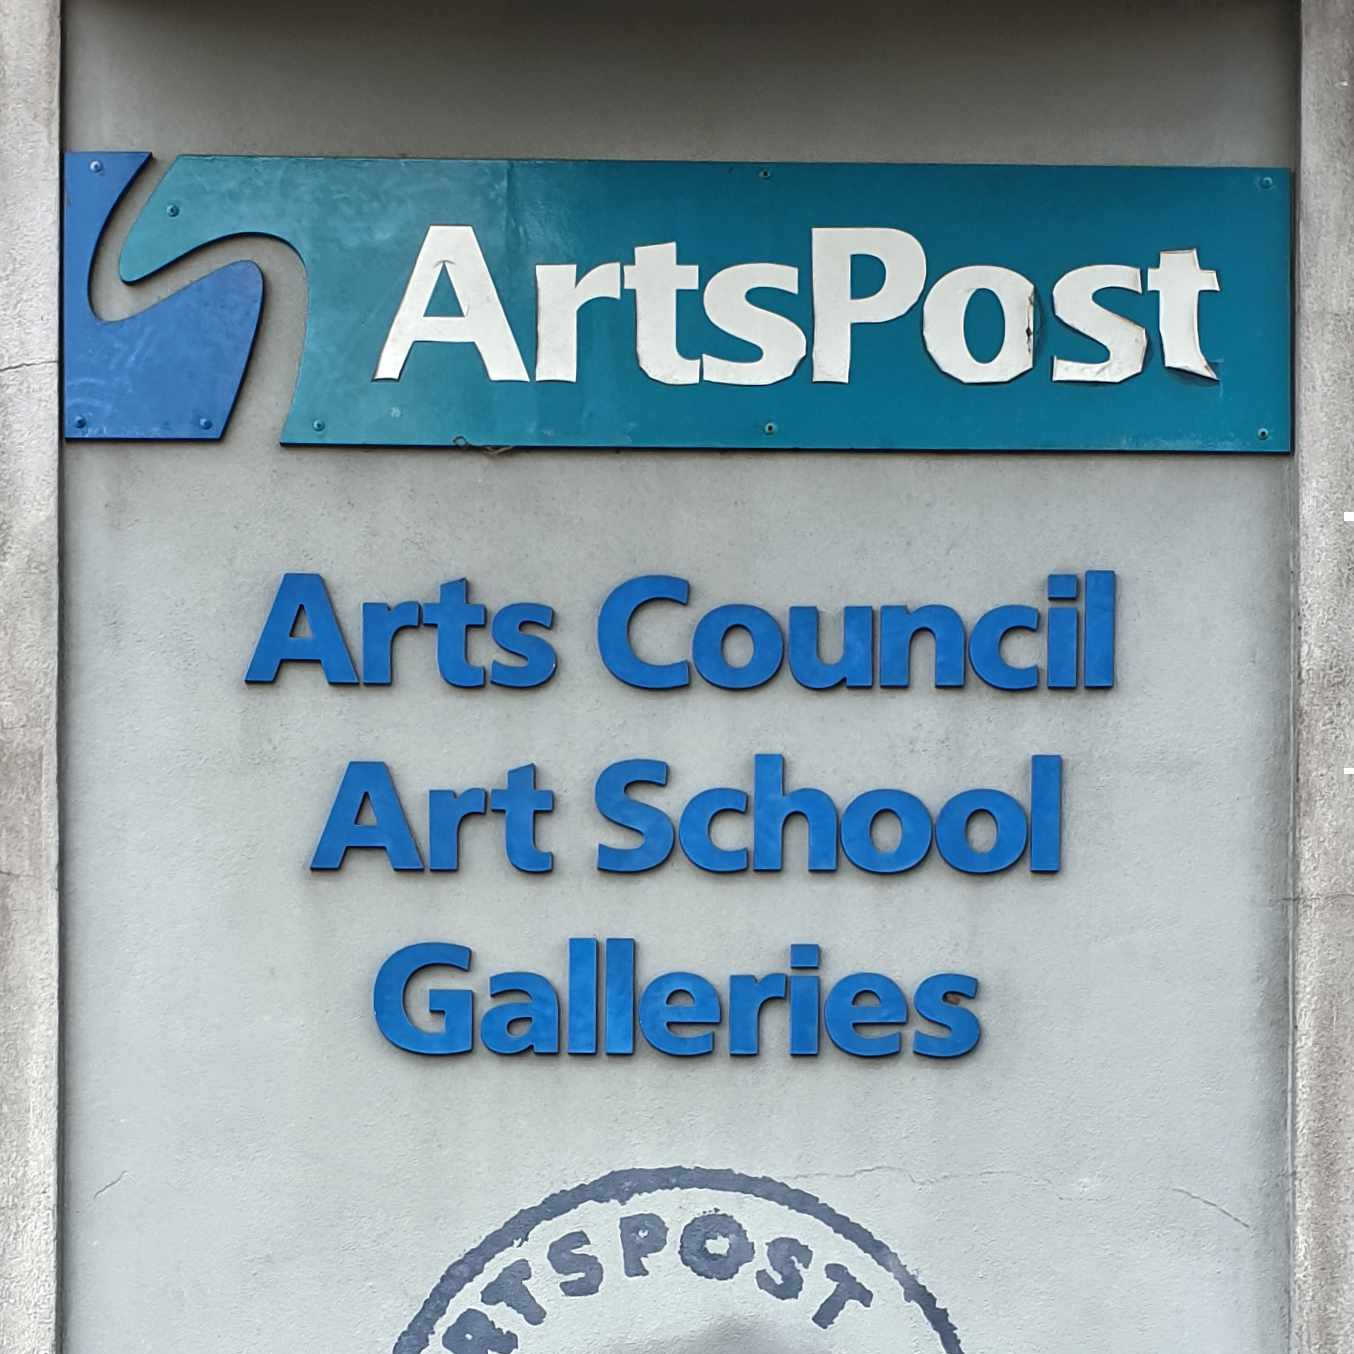 ArtsPost Galleries and Shop, Hamilton, Waikato signage, New Zealand